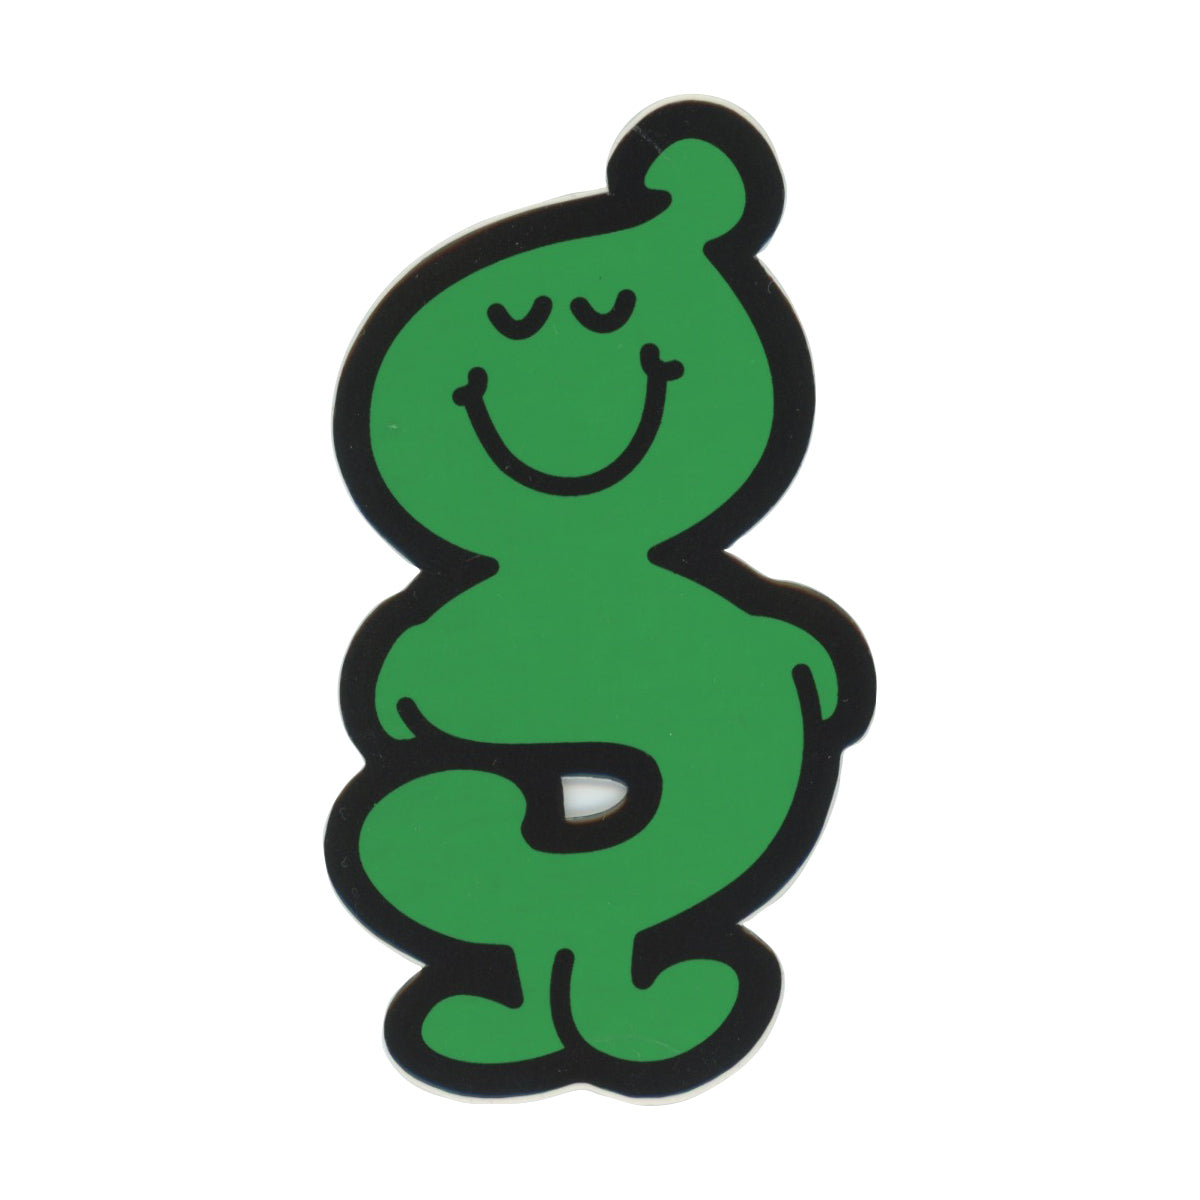 GOODENOUGH "G" Large Green Sticker